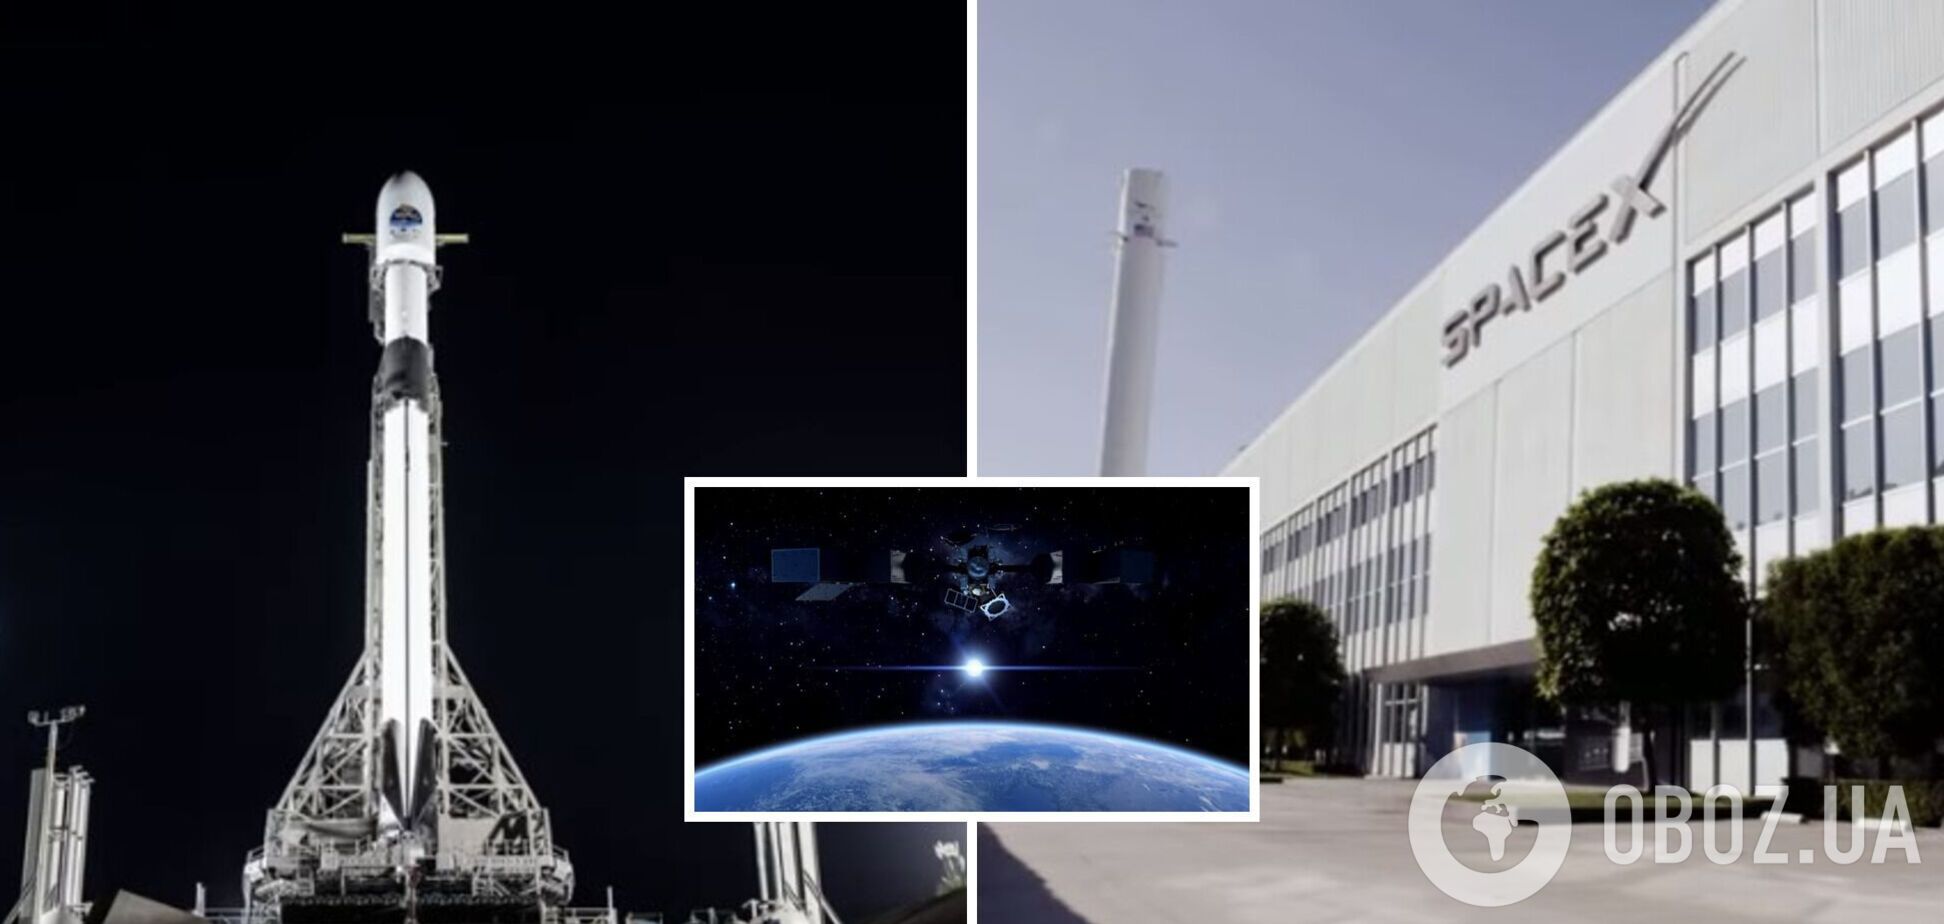 Компания SpaceX запустила на орбиту ракету Falcon 9 с европейским спутником.